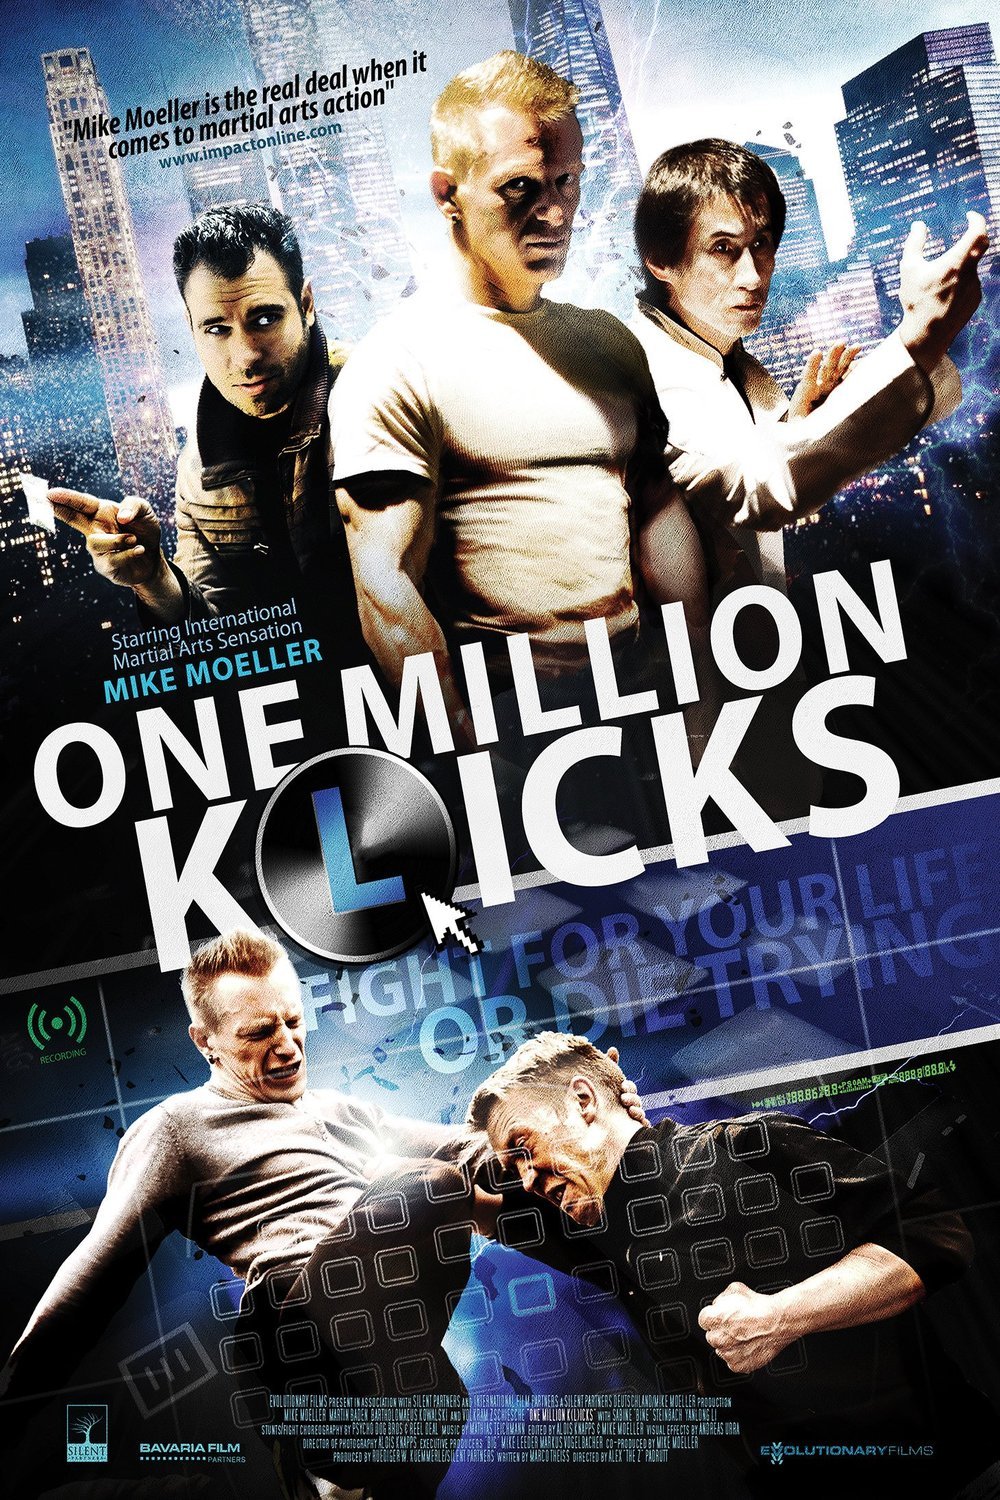 Poster of the movie One Million Klicks